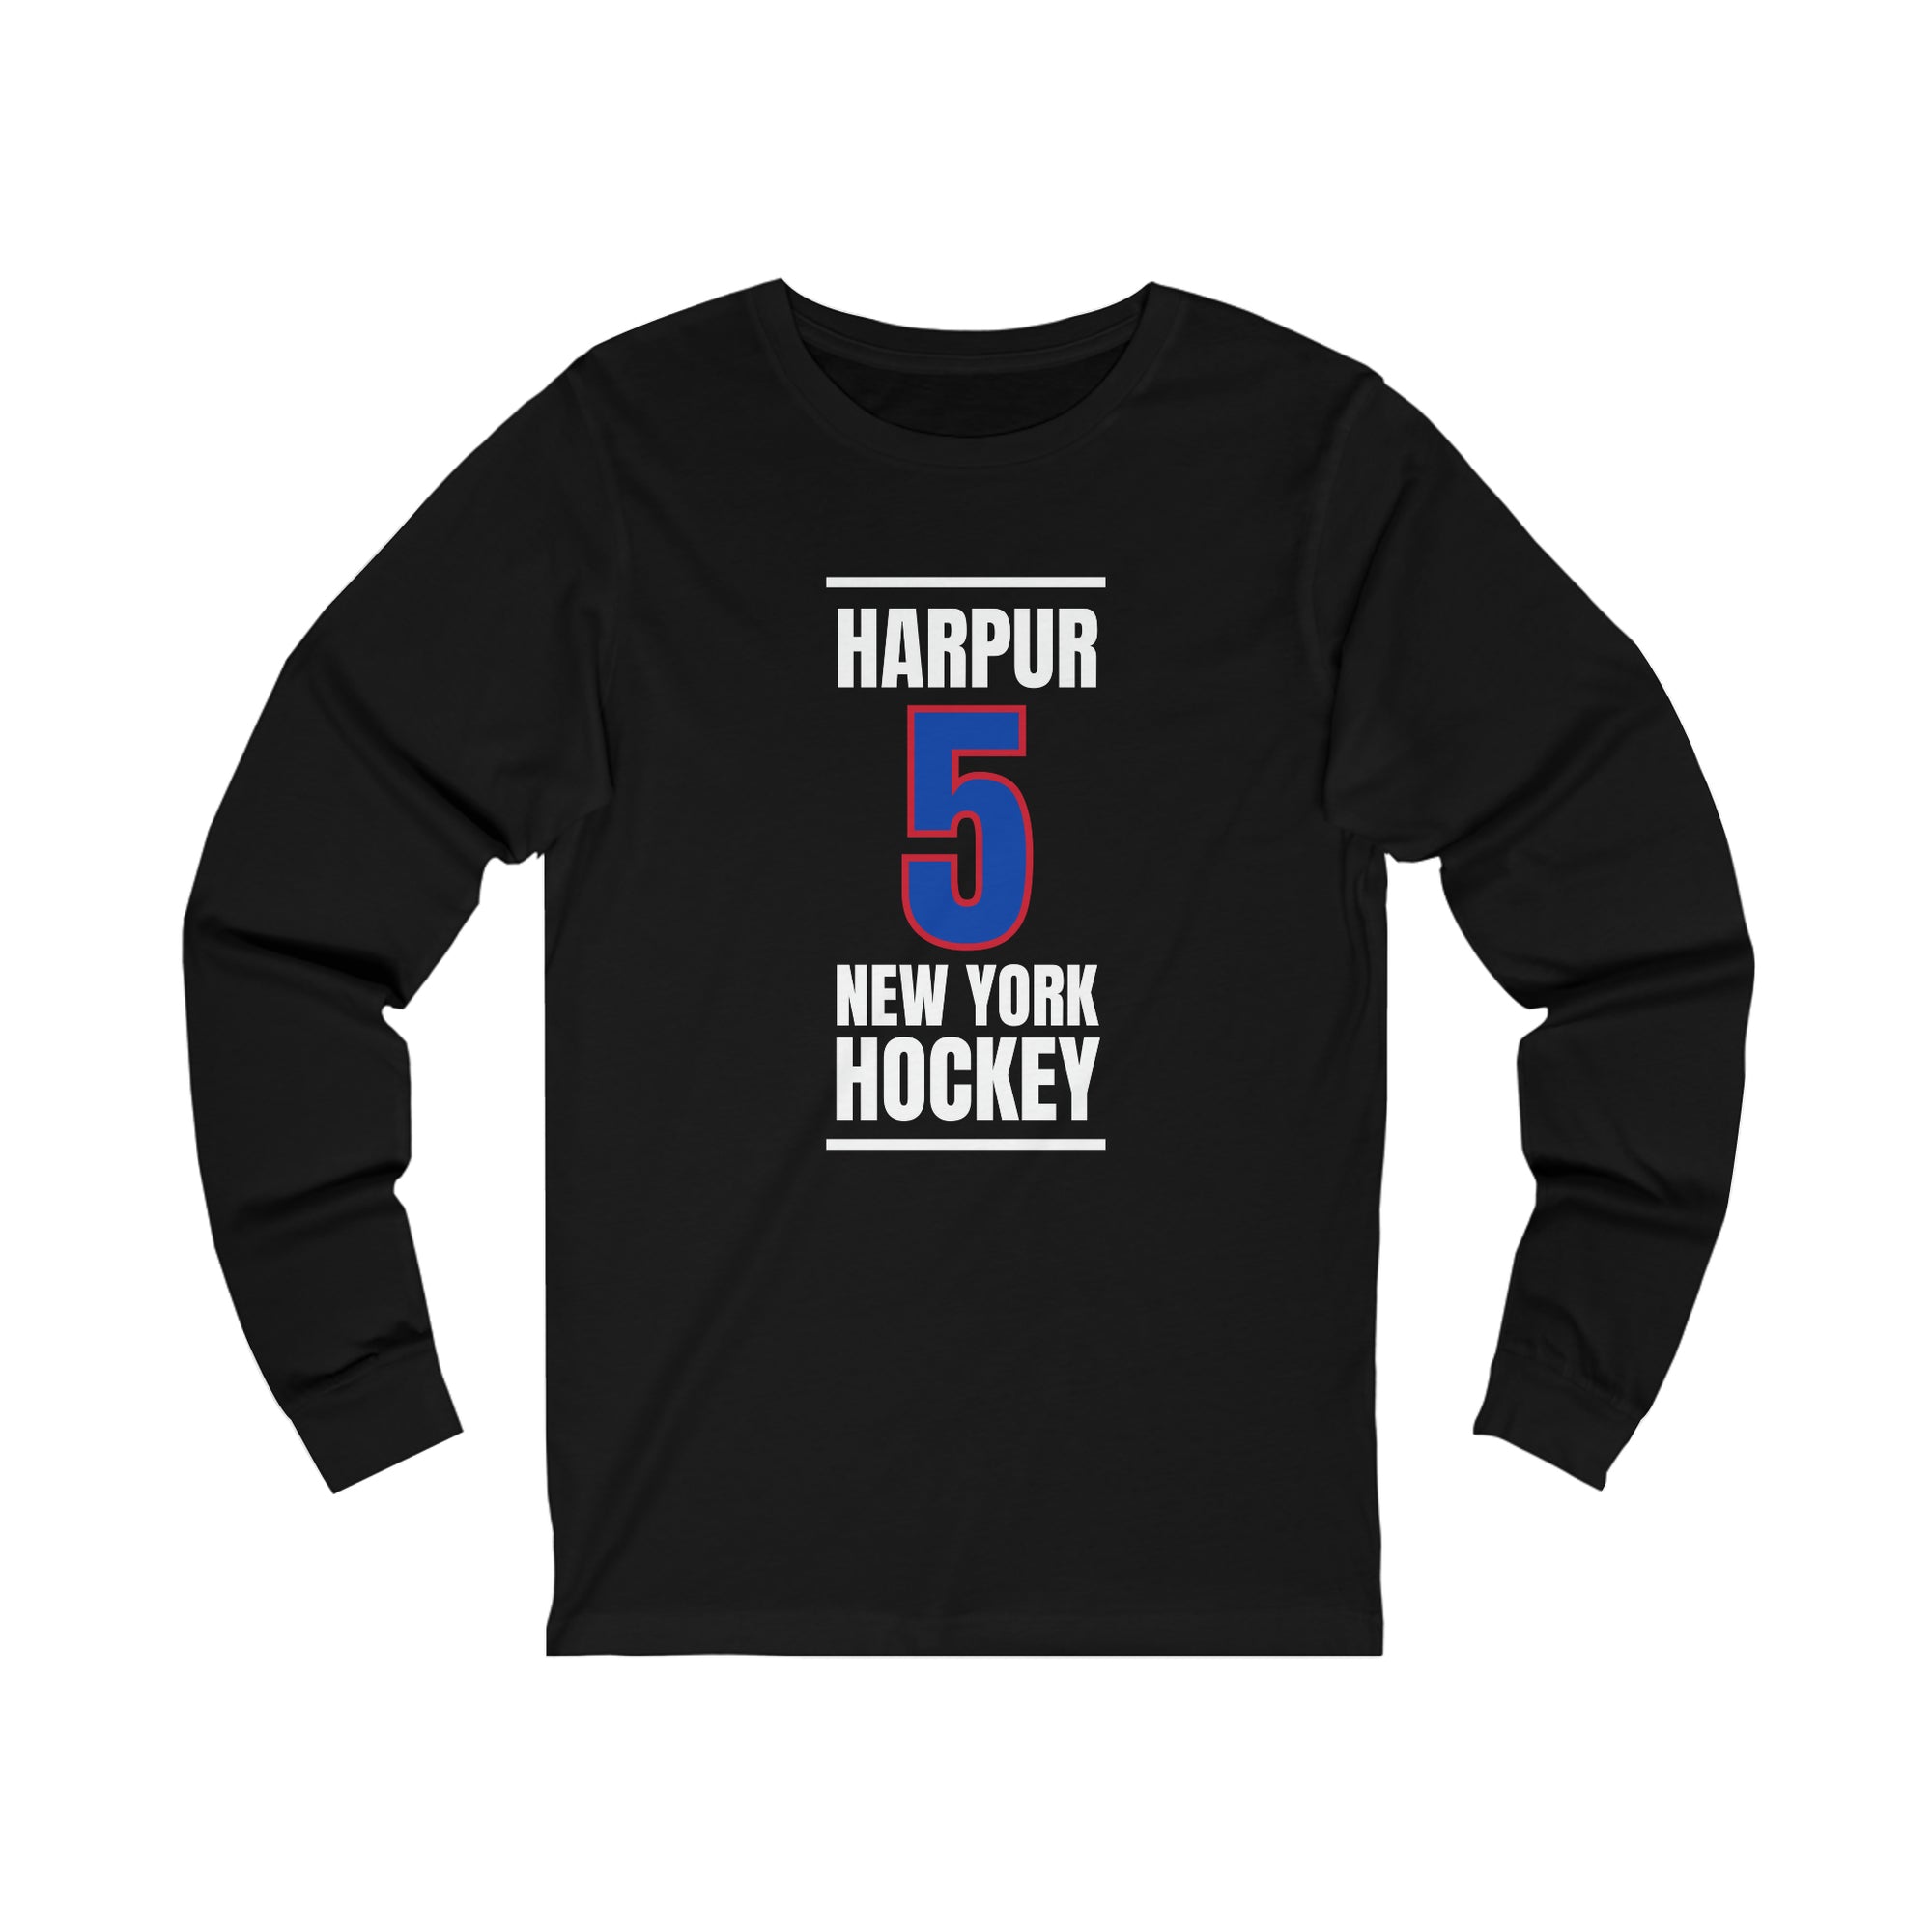 Harpur 5 New York Hockey Royal Blue Vertical Design Unisex Jersey Long Sleeve Shirt